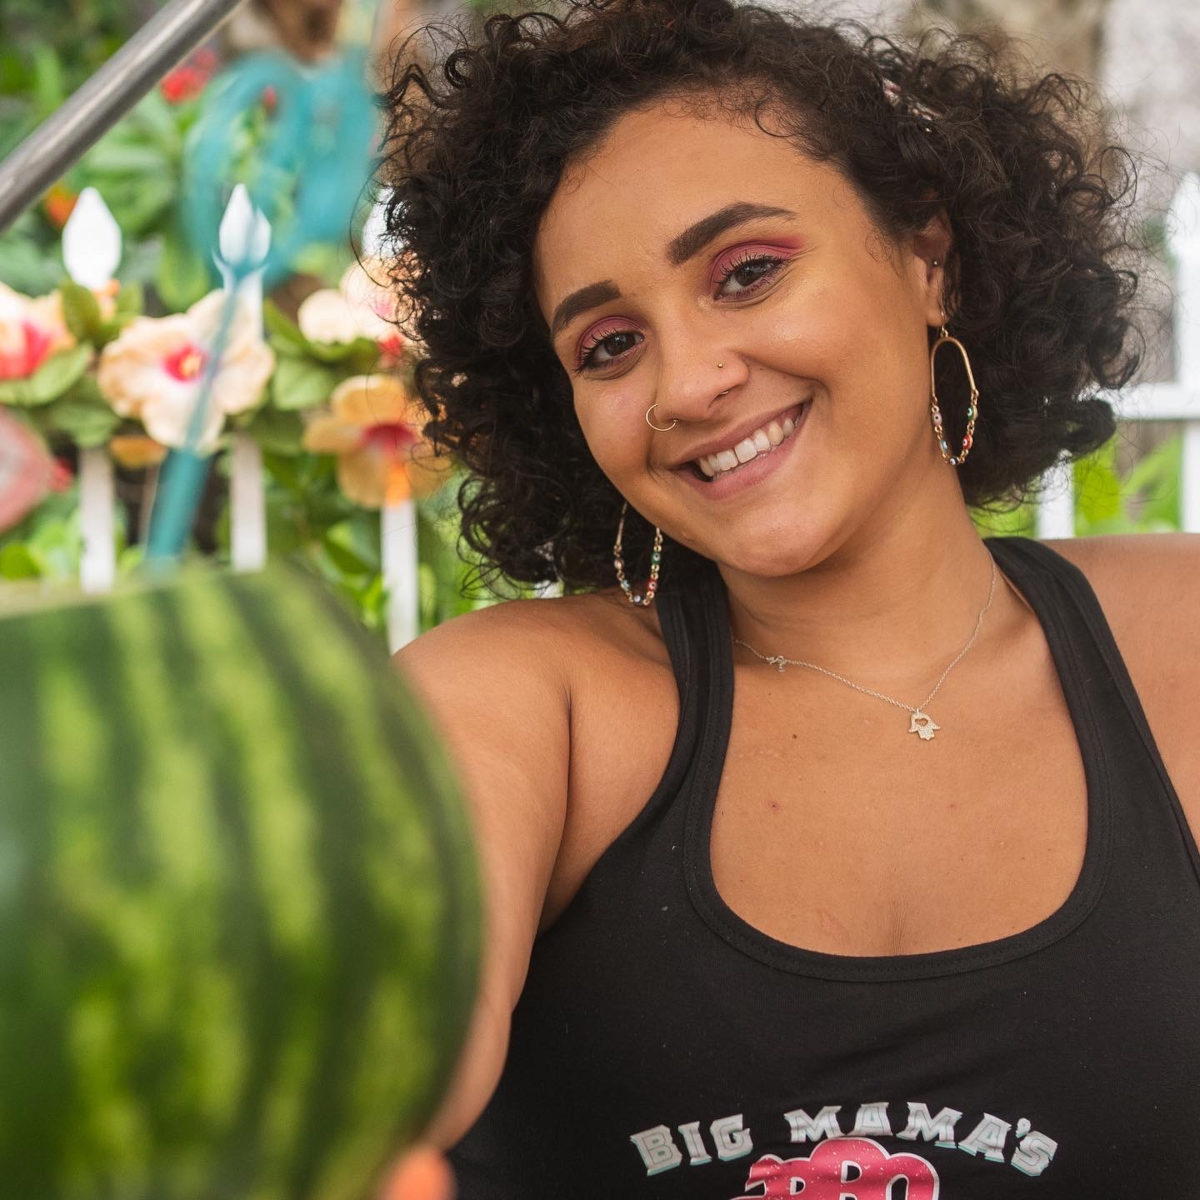 Women holding a watermelon